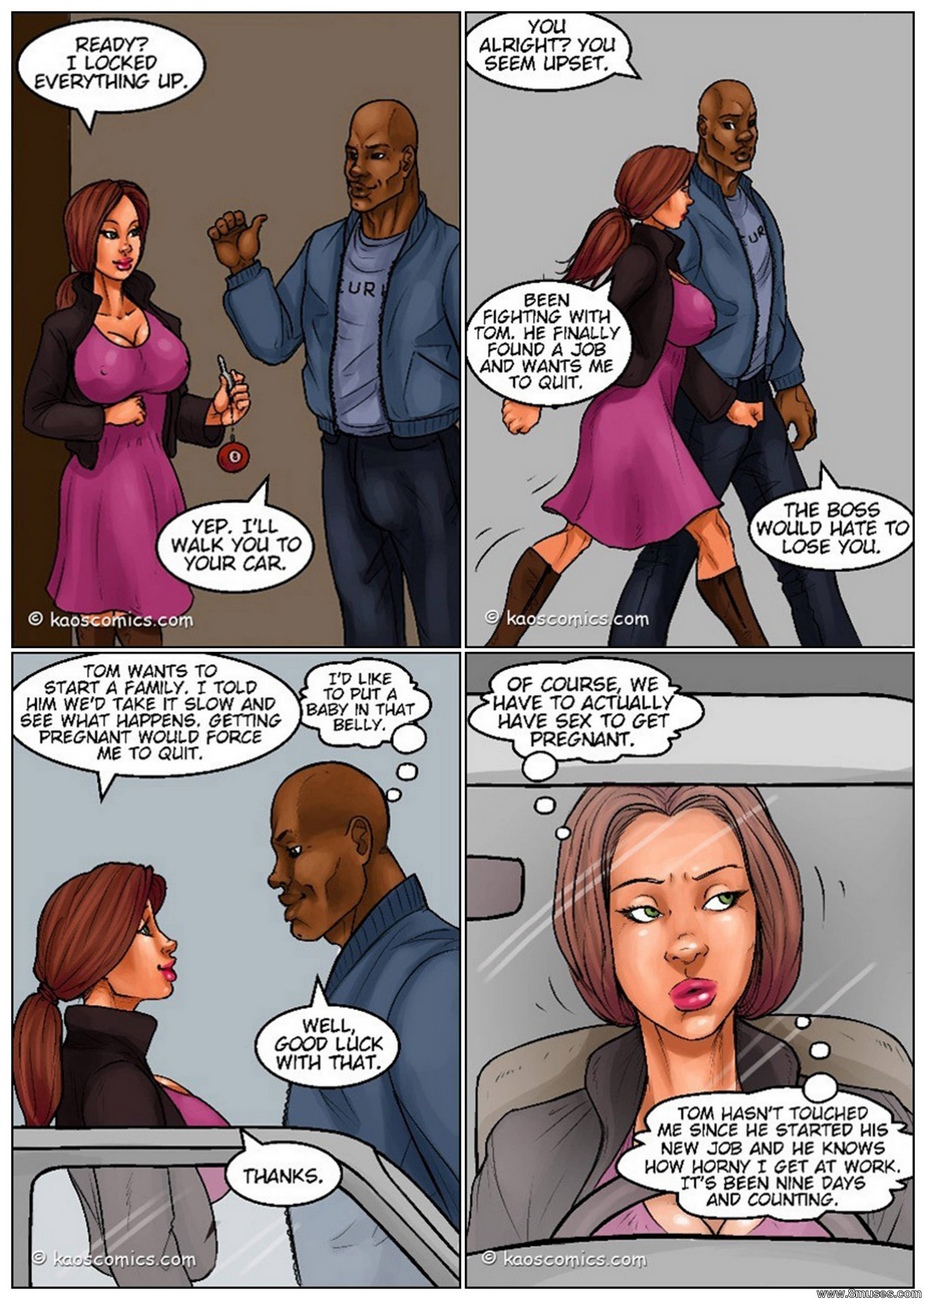 Sharing Wife Interracial Pregnant Comics Niche Top Mature image